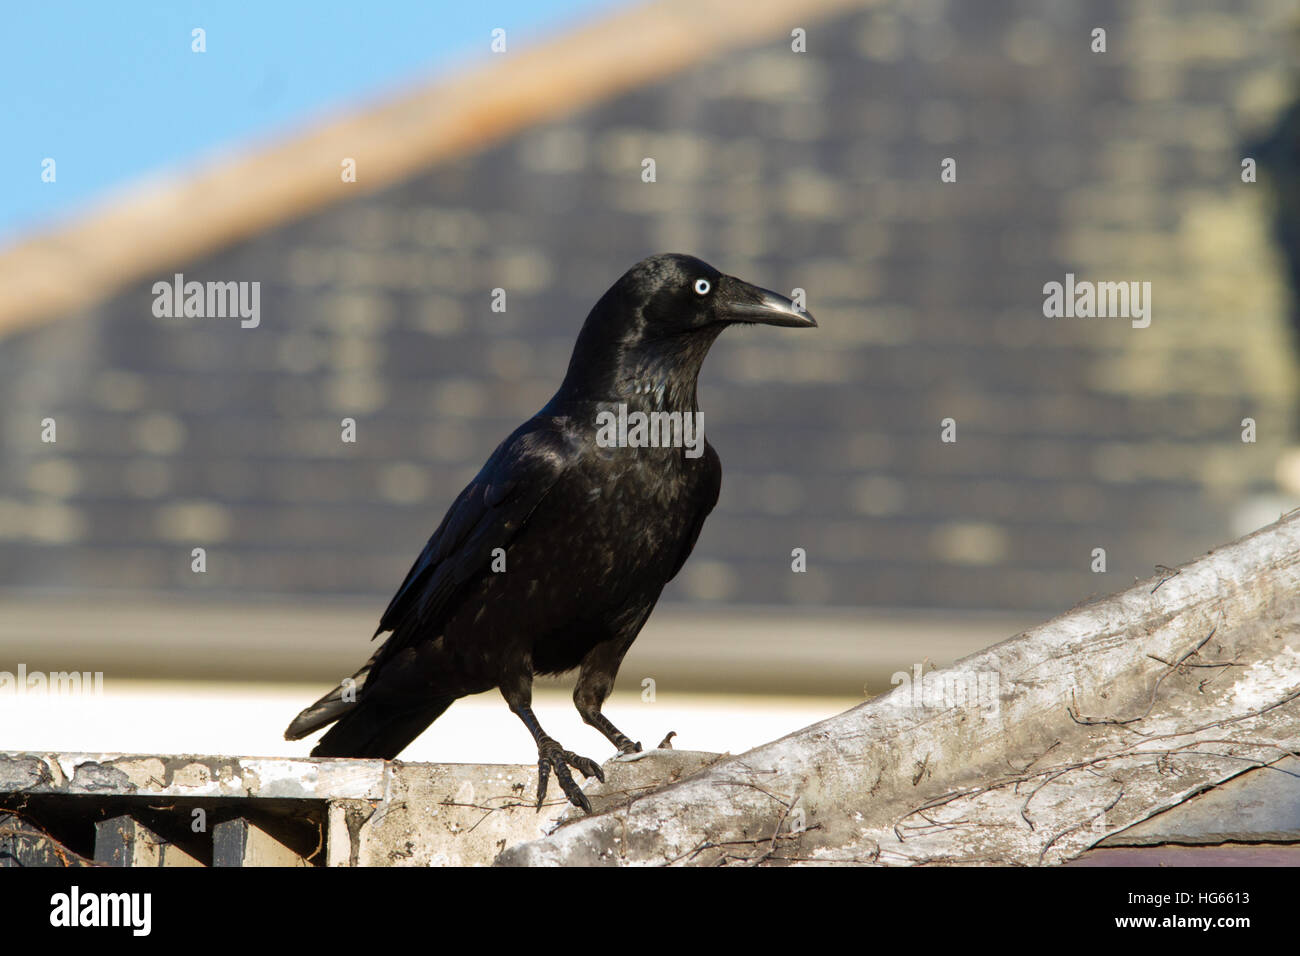 Forest Raven (Corvus tasmanicus) in an urban setting Stock Photo